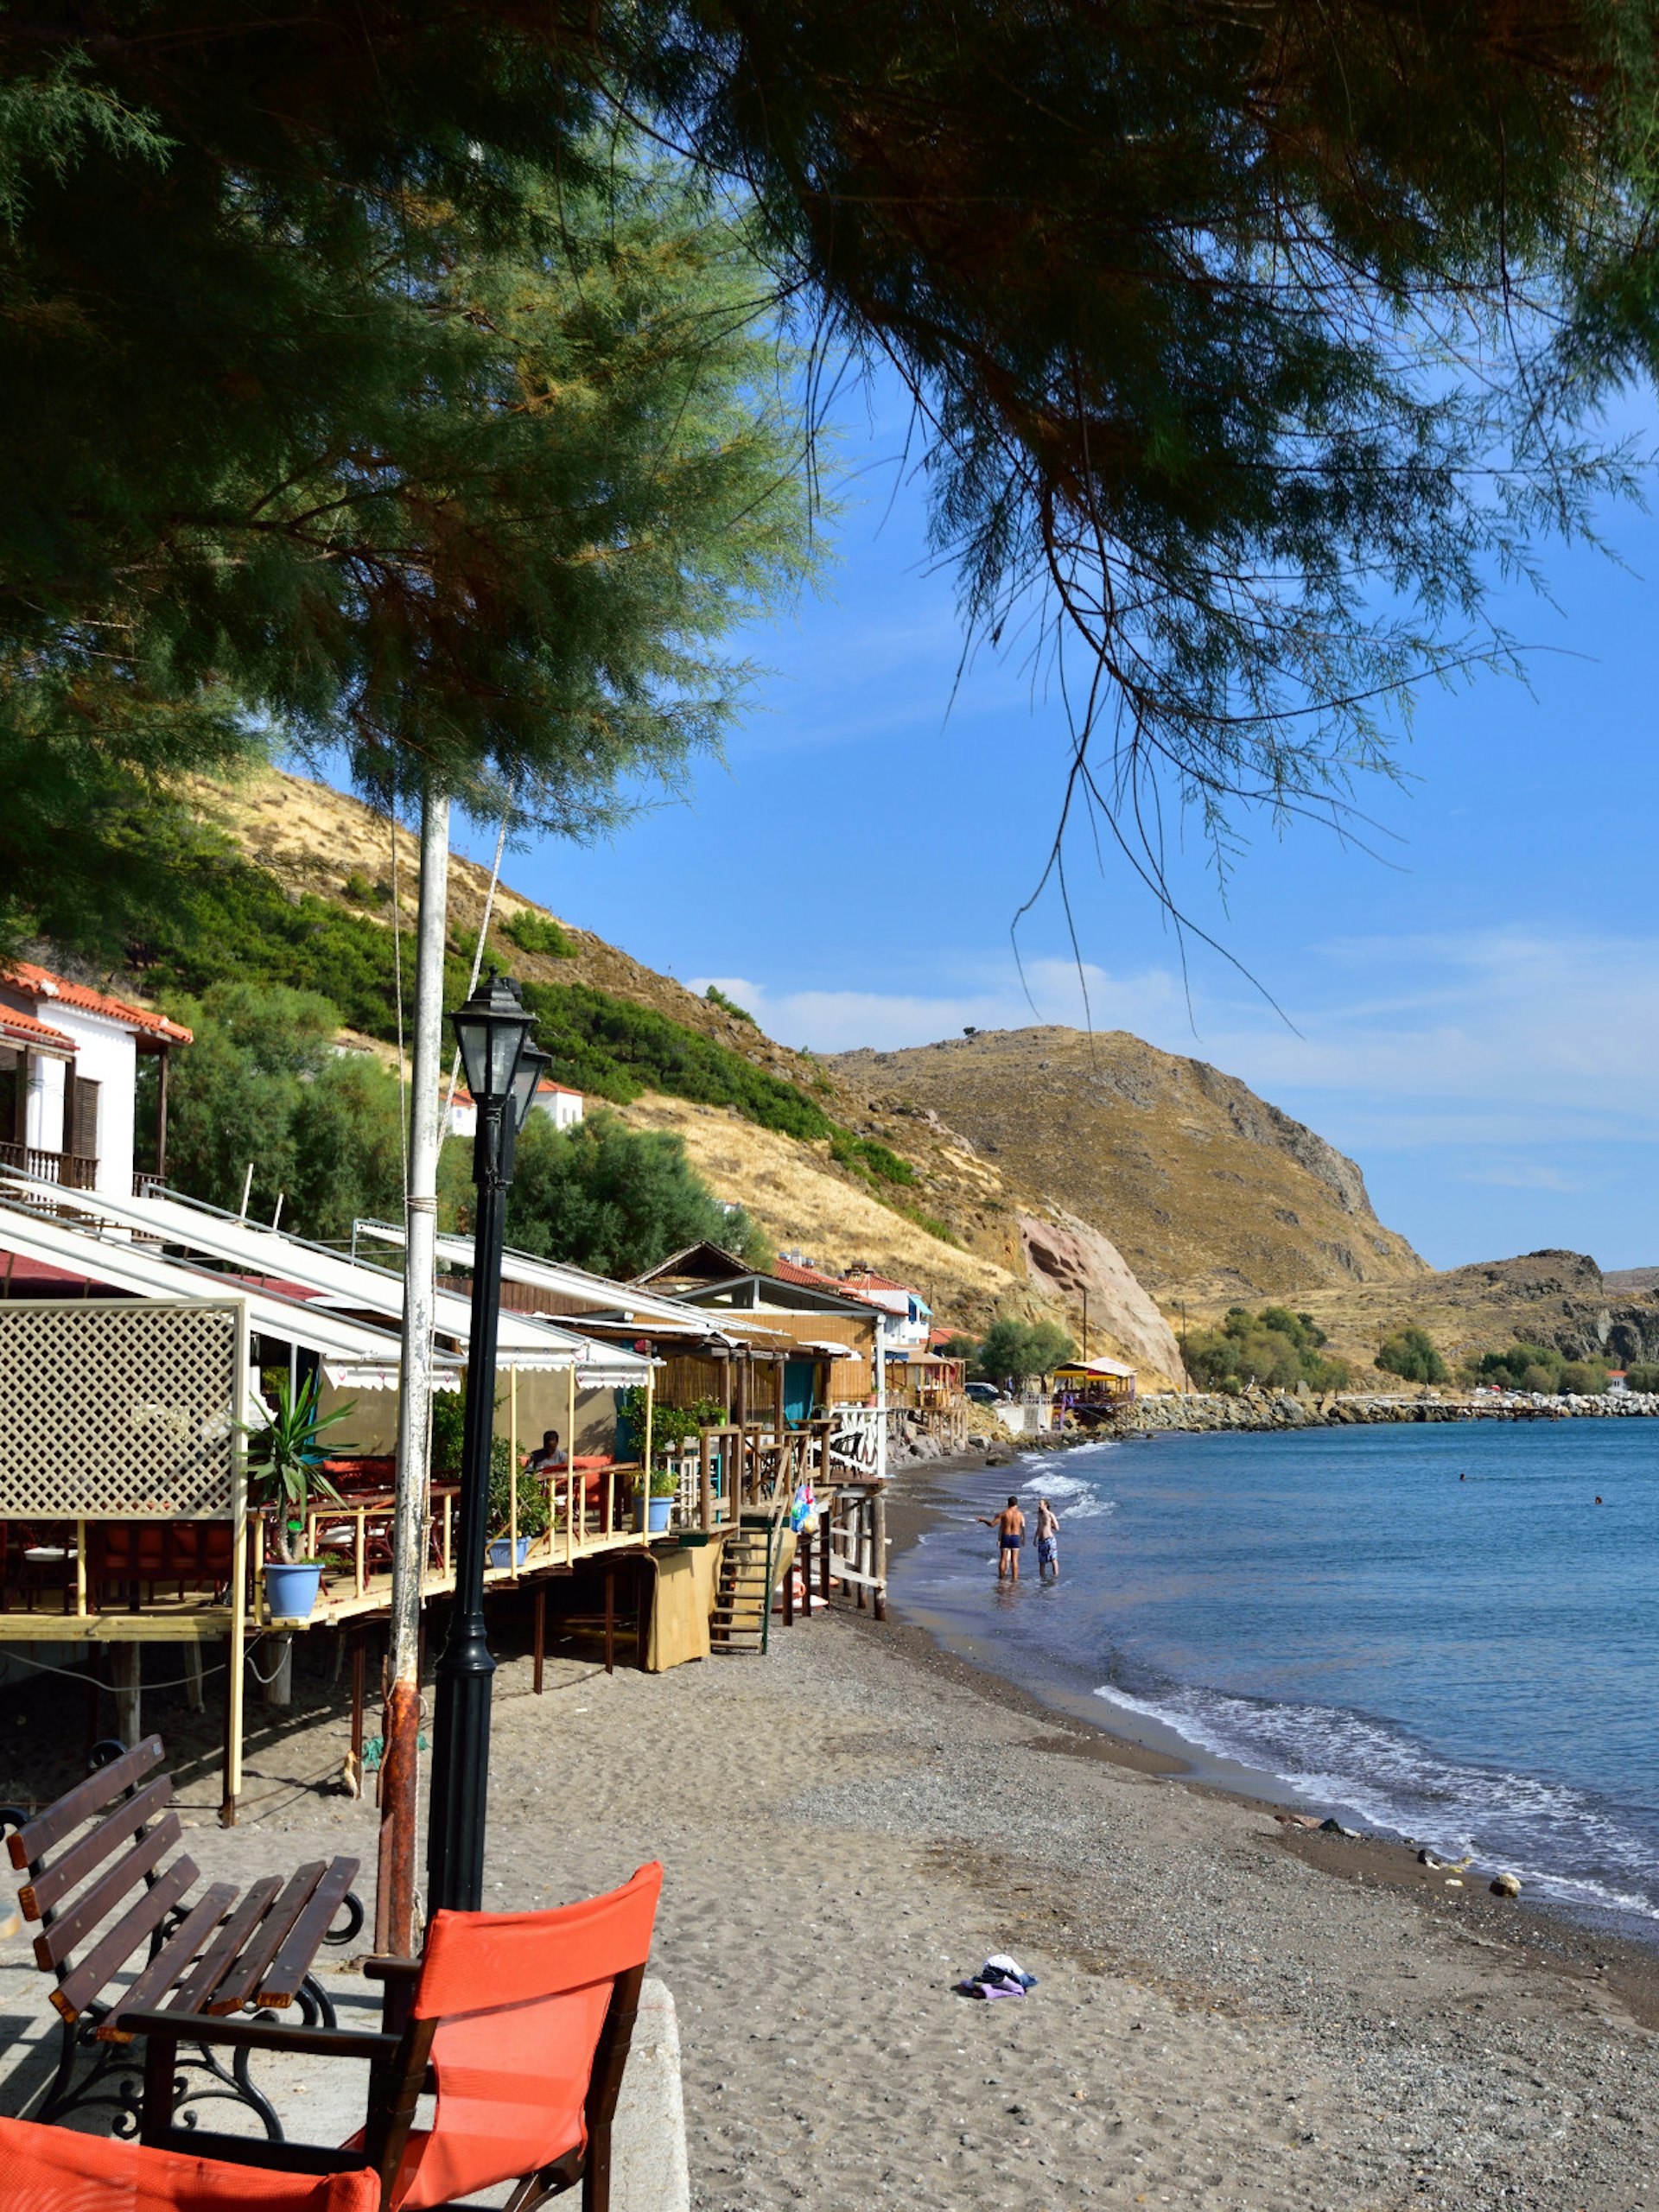 A beach taverna at the laid-back Skala Eresou resort town on Lesvos © MaRap / Shutterstock